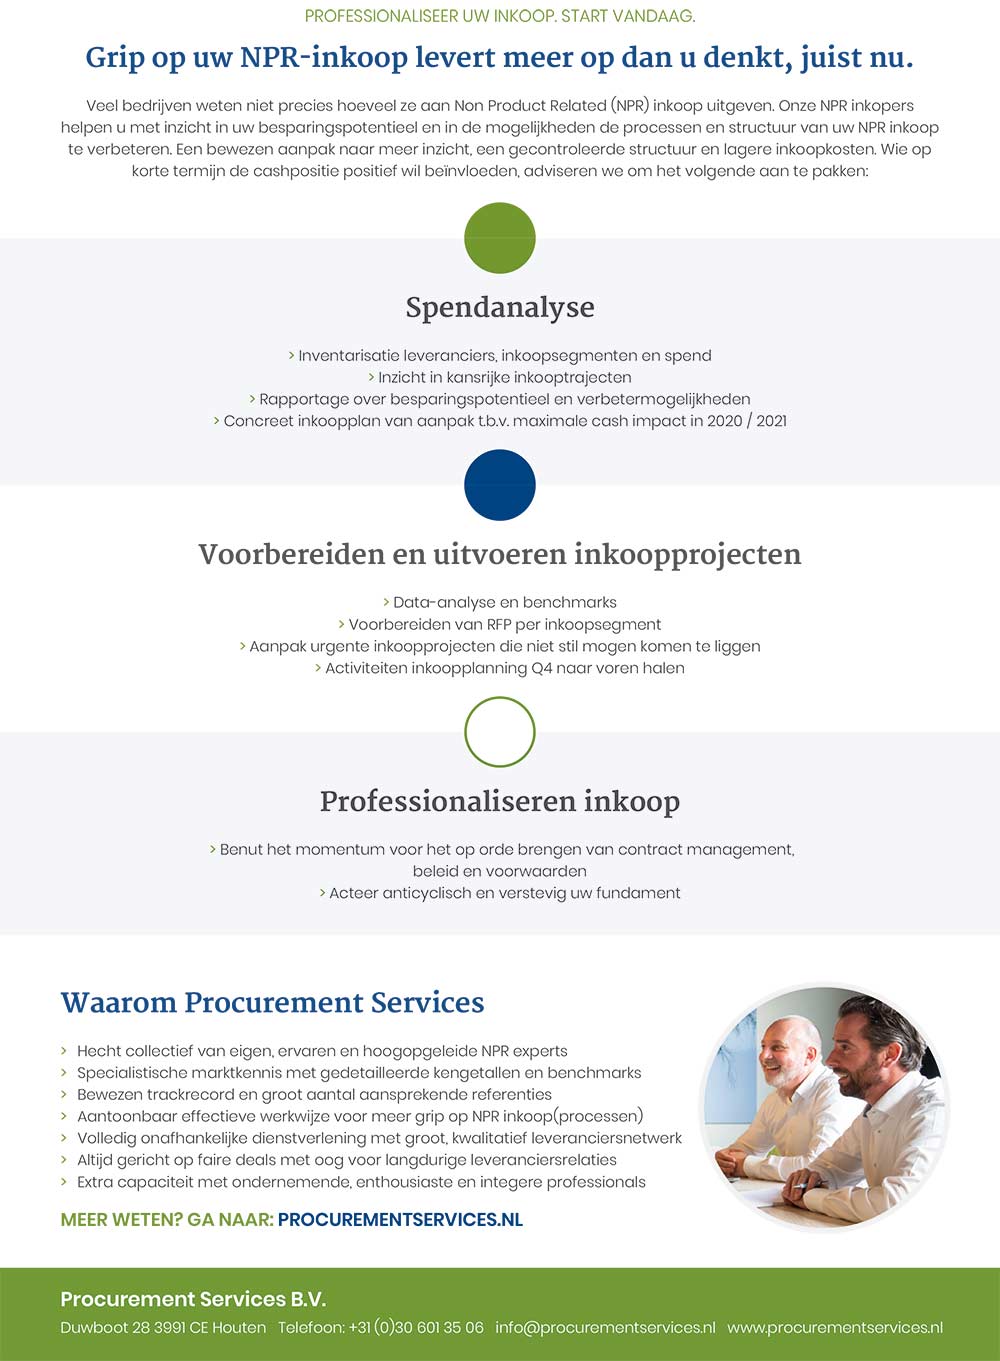 Procurement Services - Spendanalyse